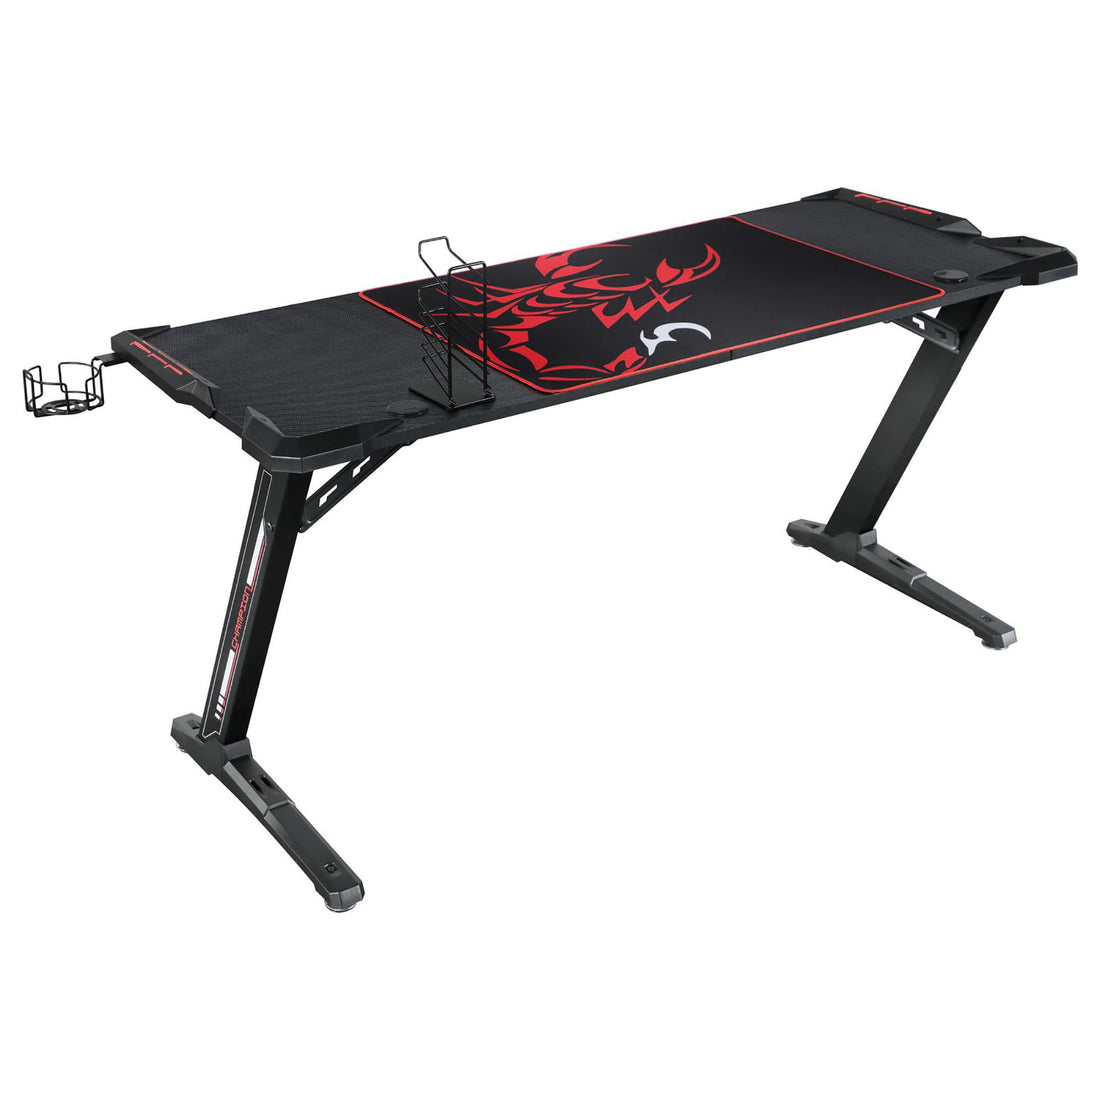 Black Z Framed Gaming Desk with Rgb Lighting